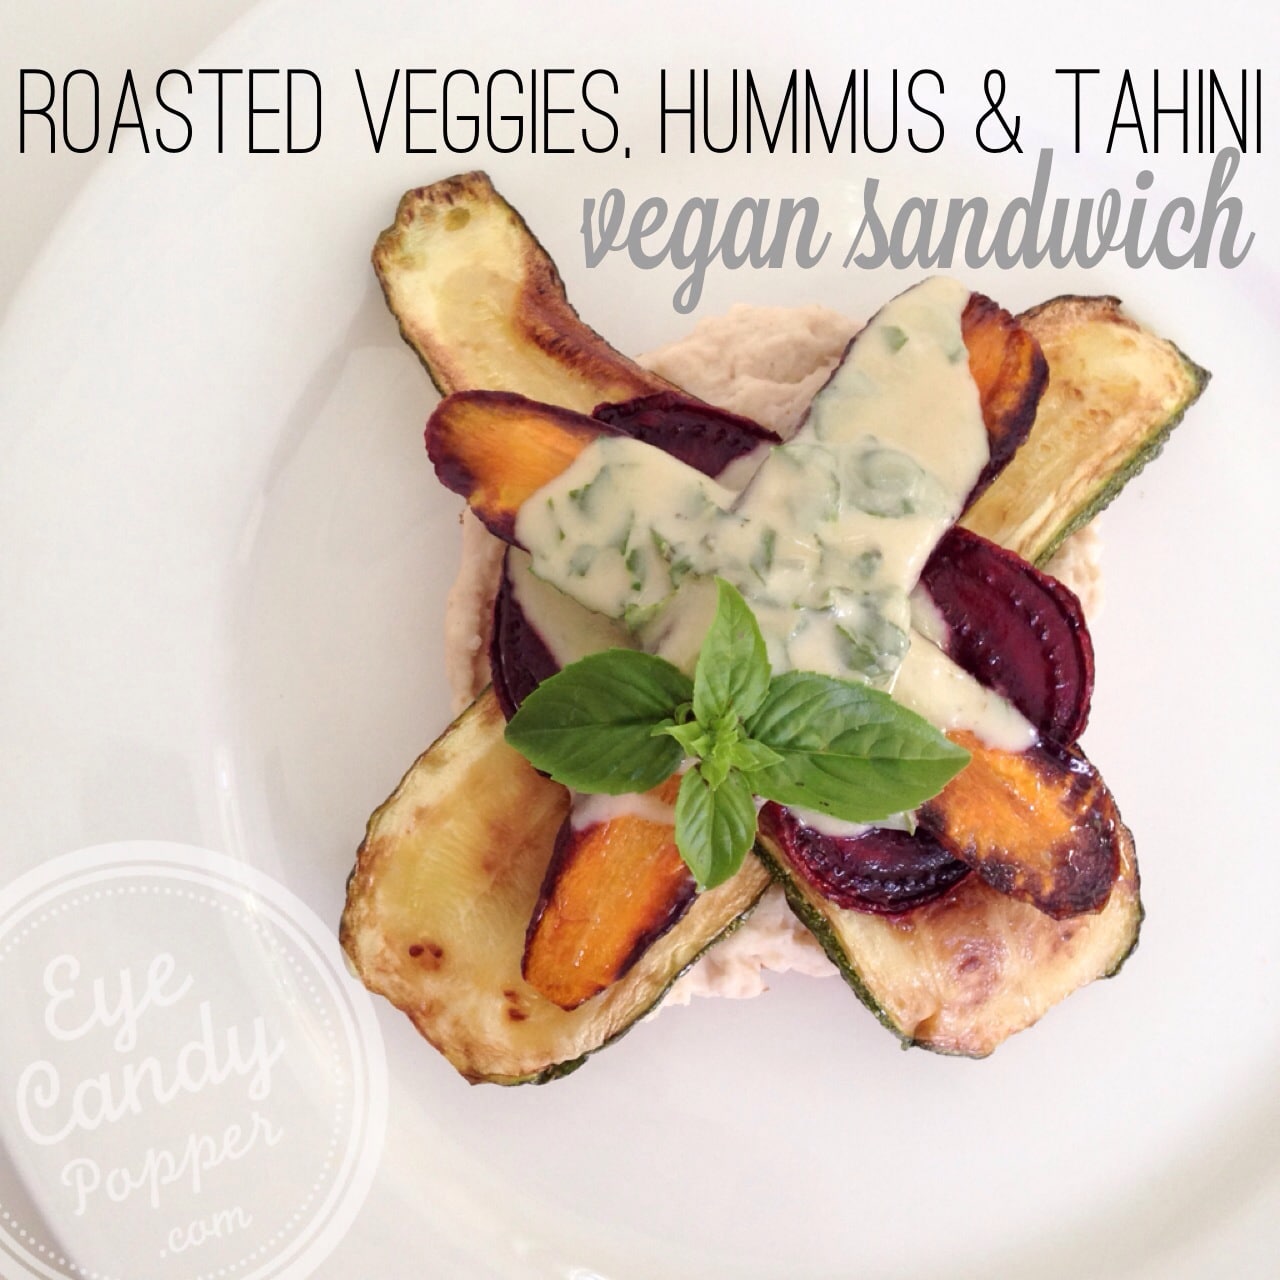 Roasted veggie sandwich with hummus and tahini dressing (vegan)